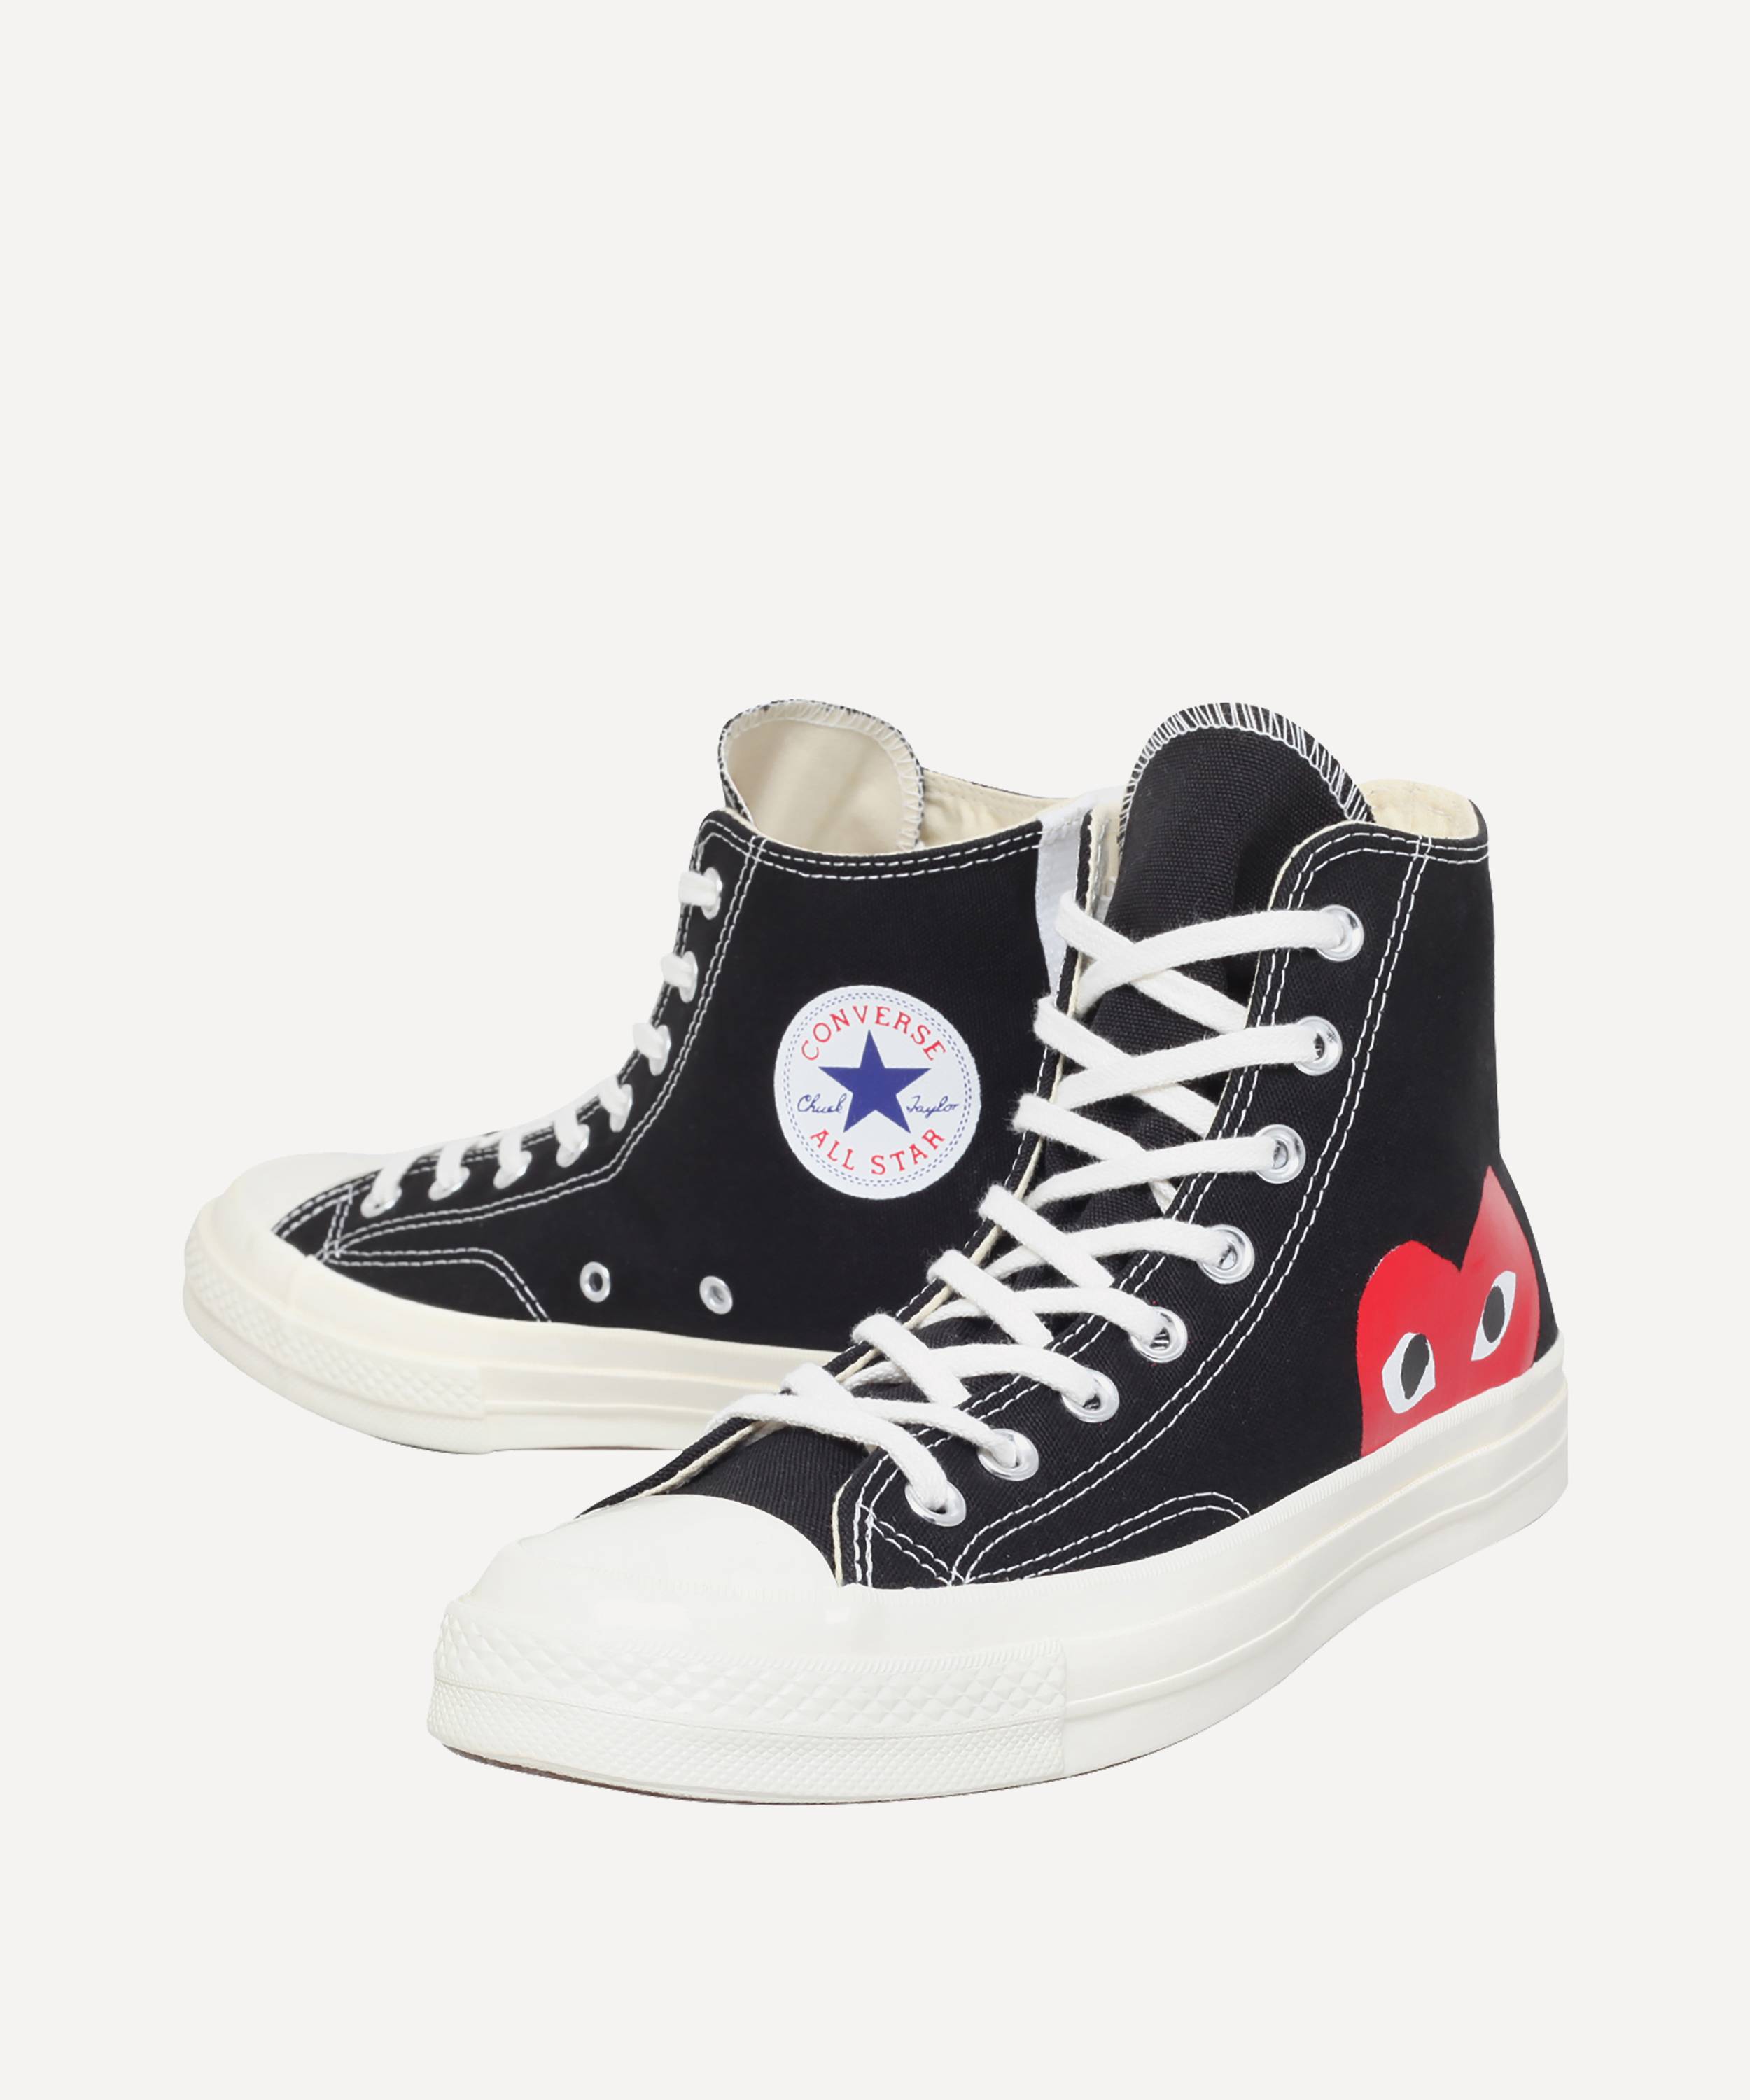 Udgående Stillehavsøer Brig Converse Comme des Garçons Play x Converse Chuck Taylor Canvas Sneakers Hi  | Liberty